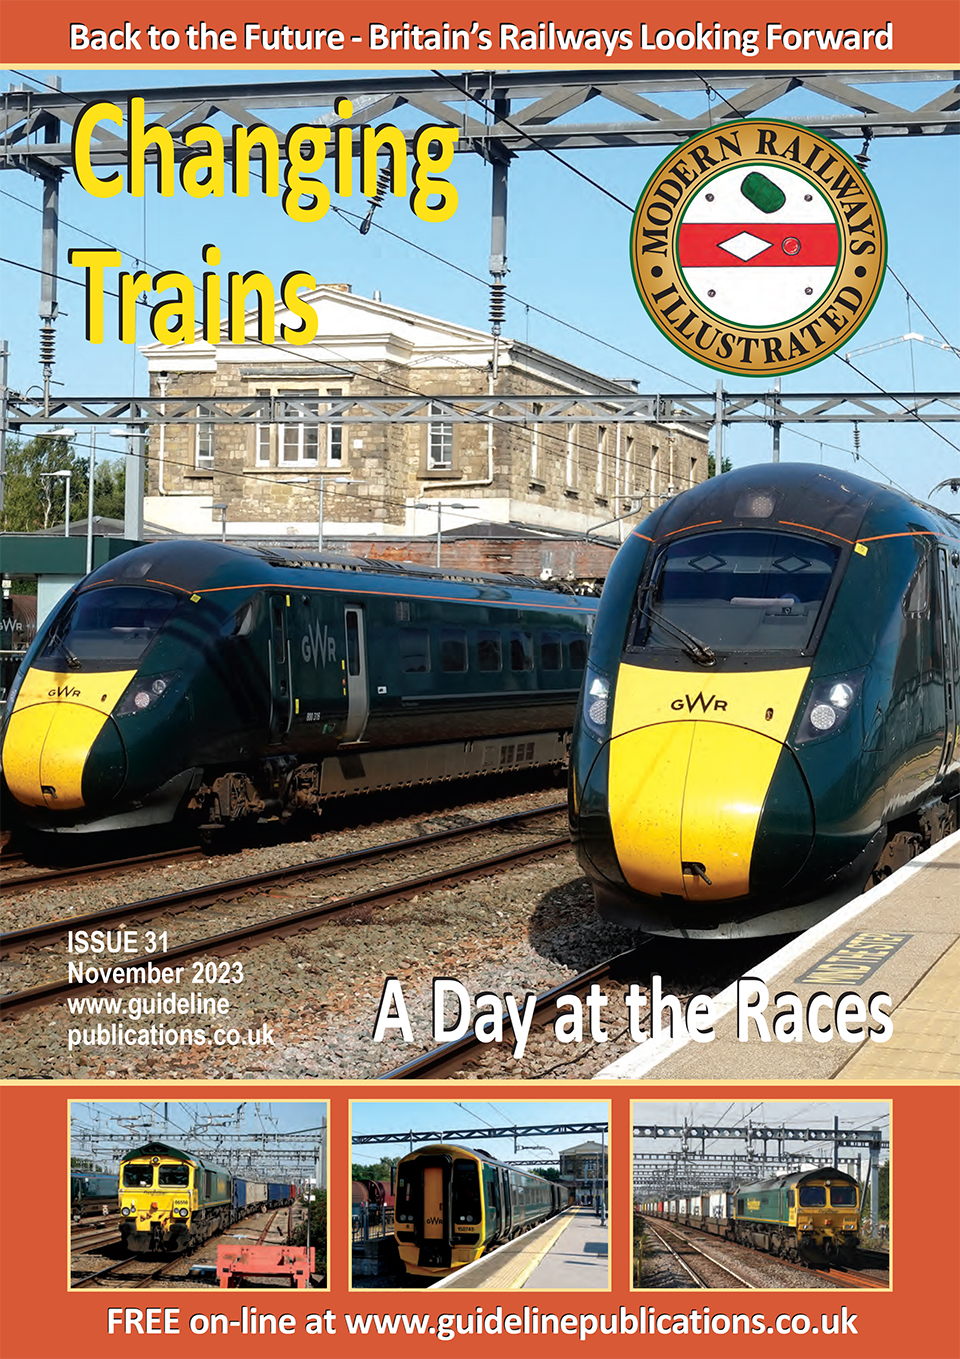 Guideline Publications Ltd Modern Railways Illustrated November 23 - Digital Only November 23 